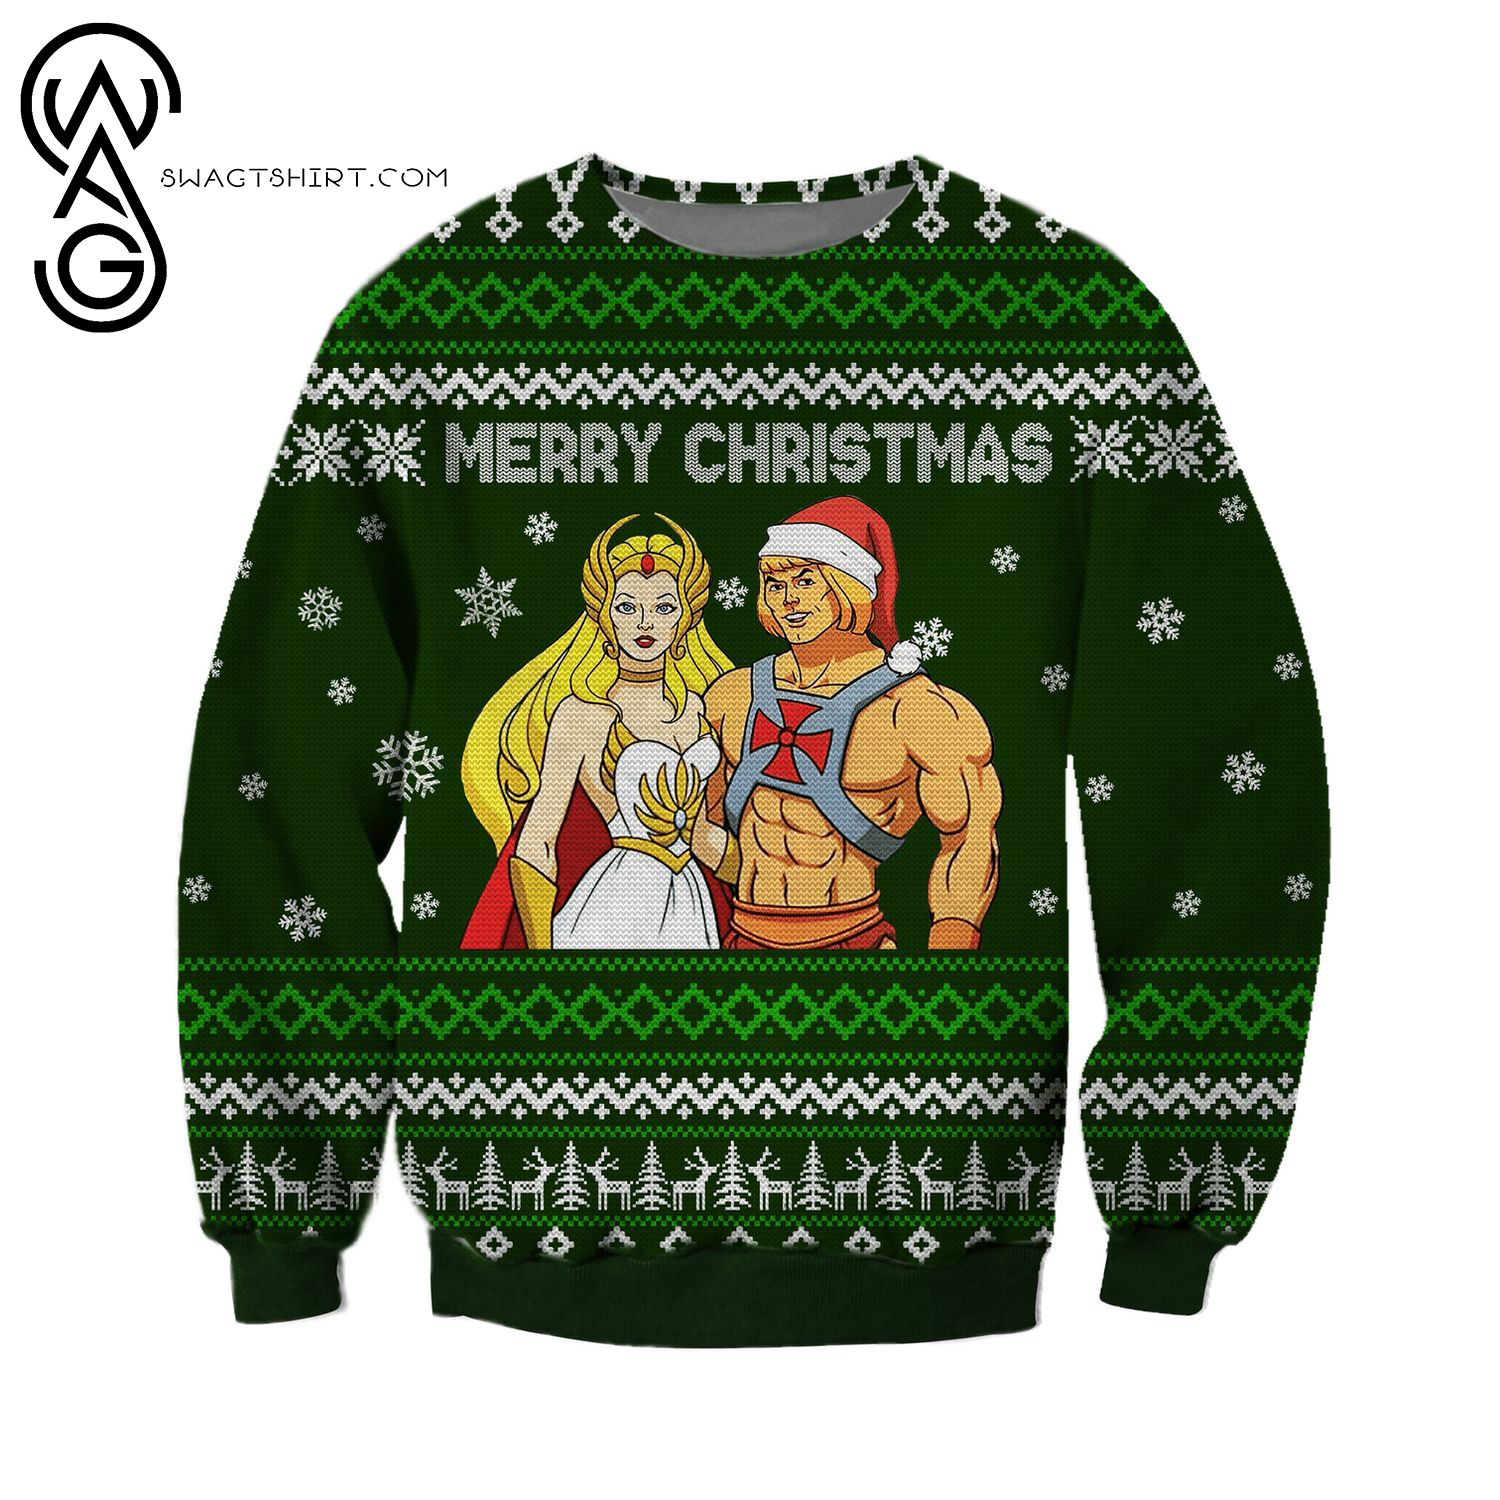 He-Man And She-Ra Full Print Ugly Christmas Sweater